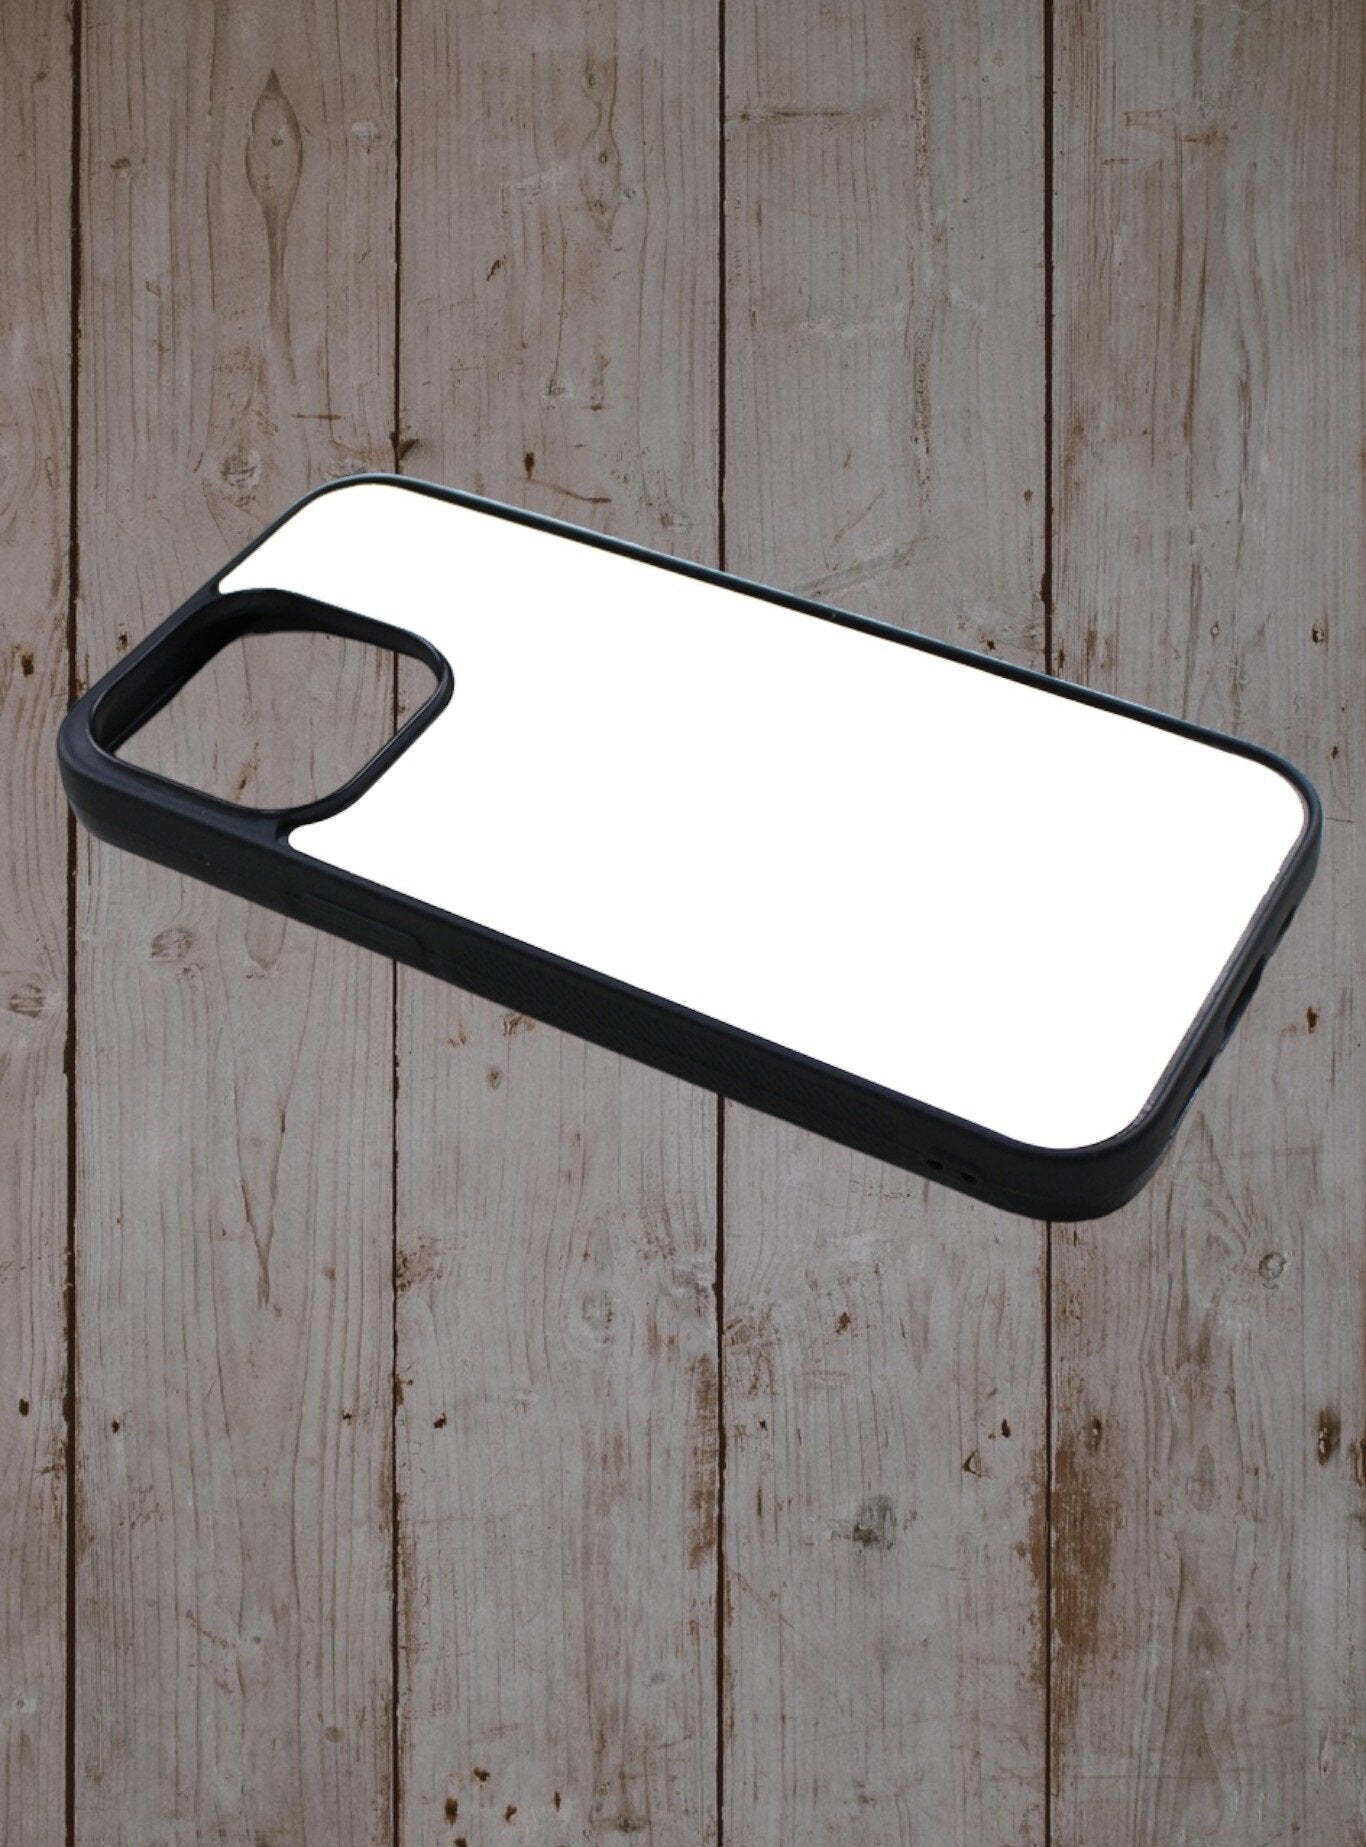 Iphone case - Mountain